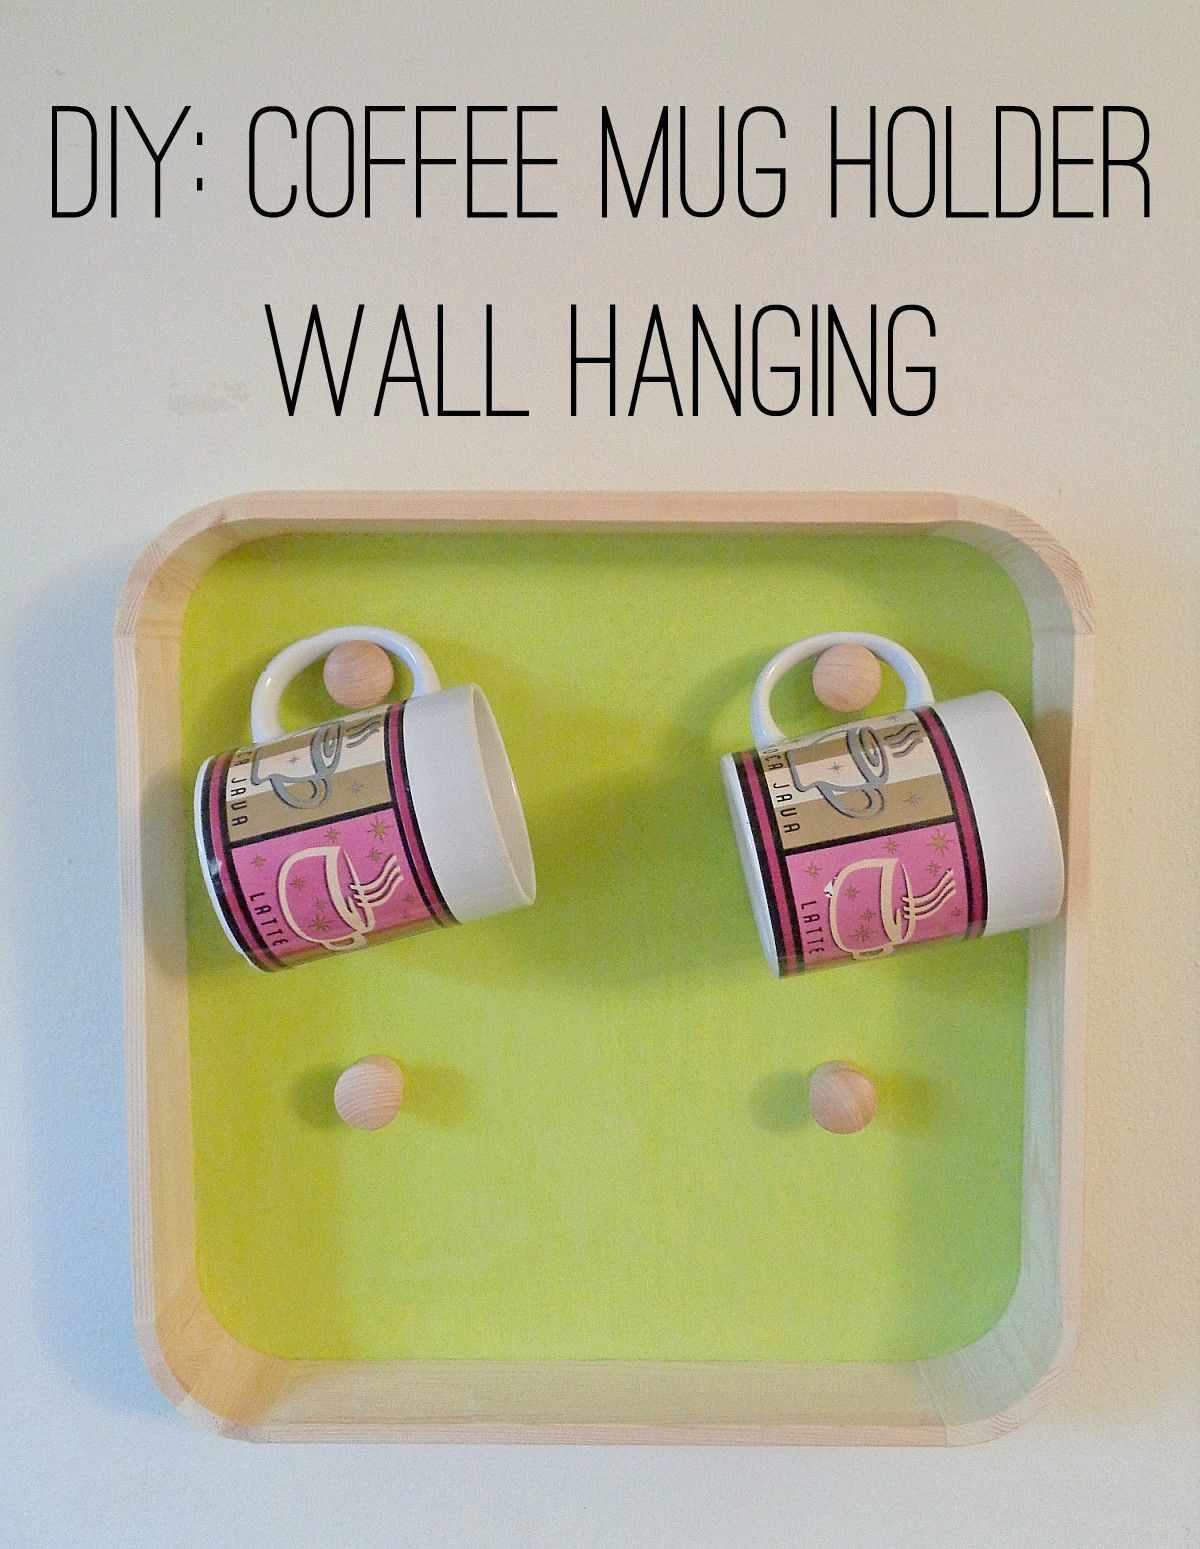 DIY Coffee Mug Rack
 DIY Coffee Mug Holder Wall Hanging